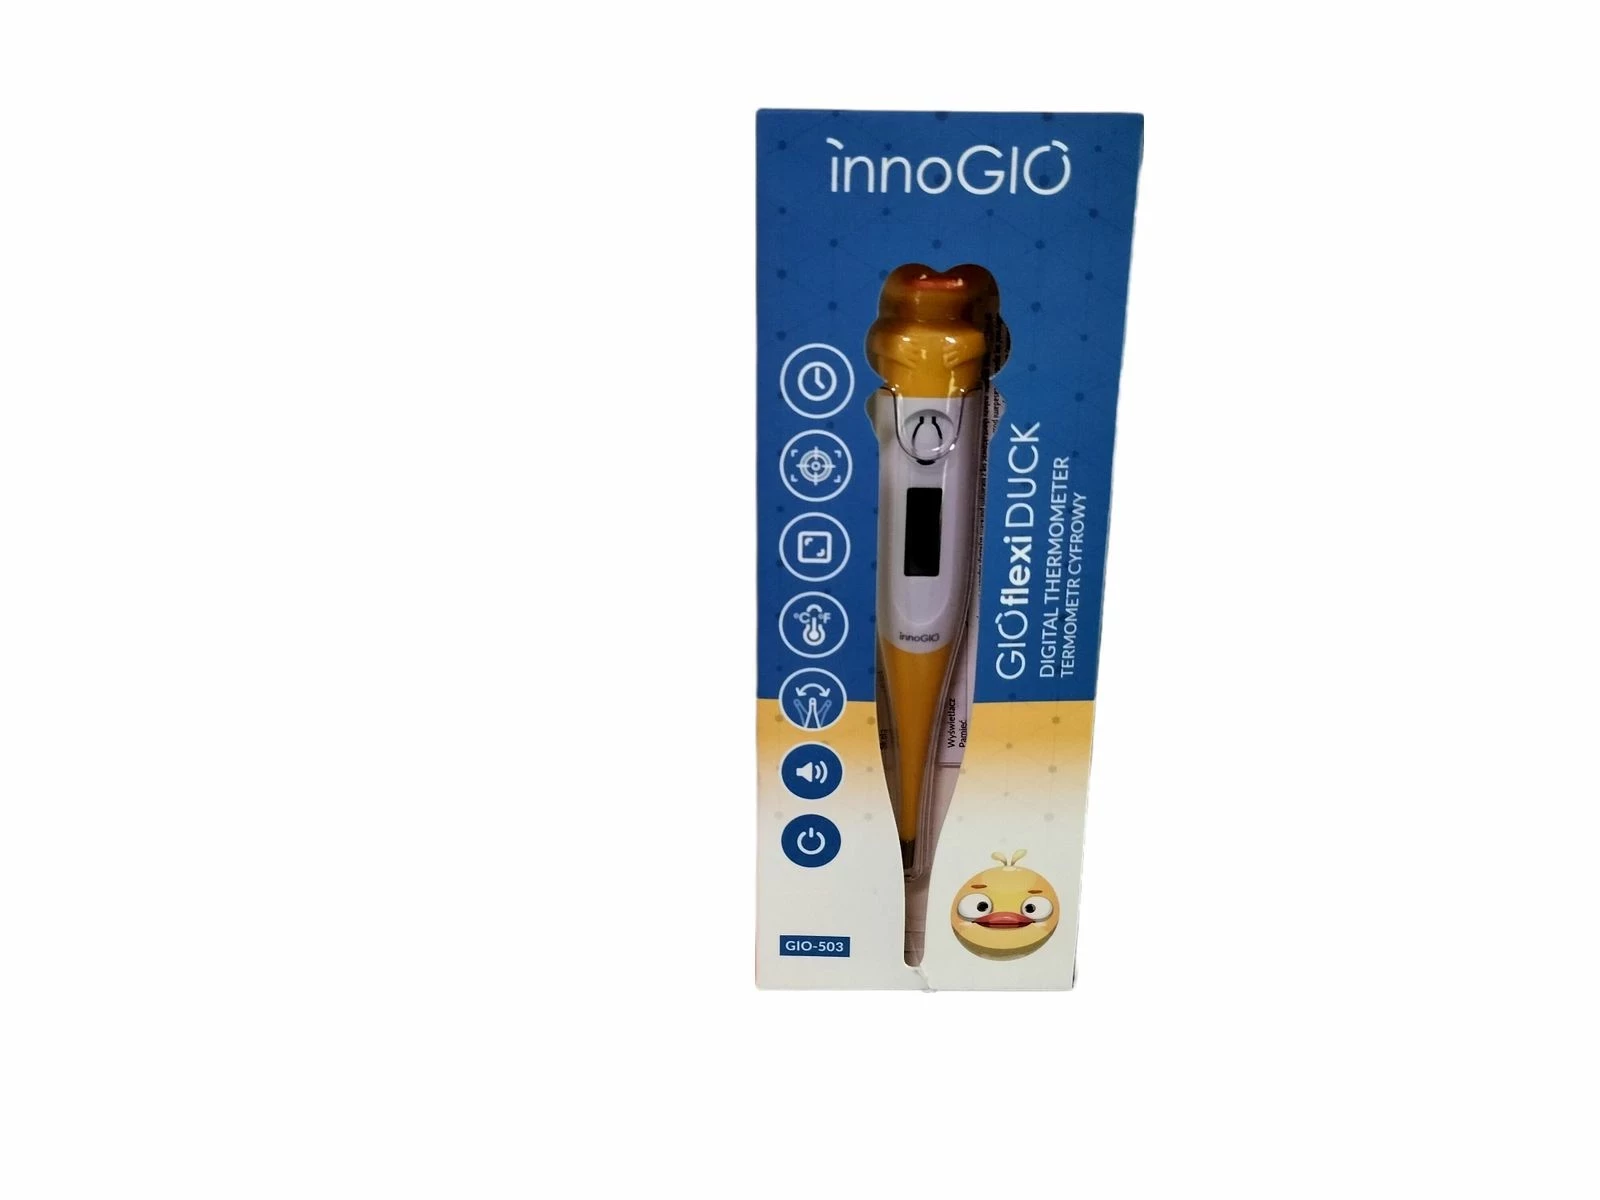 Innogio GIO-503 Termometr cyfrowy